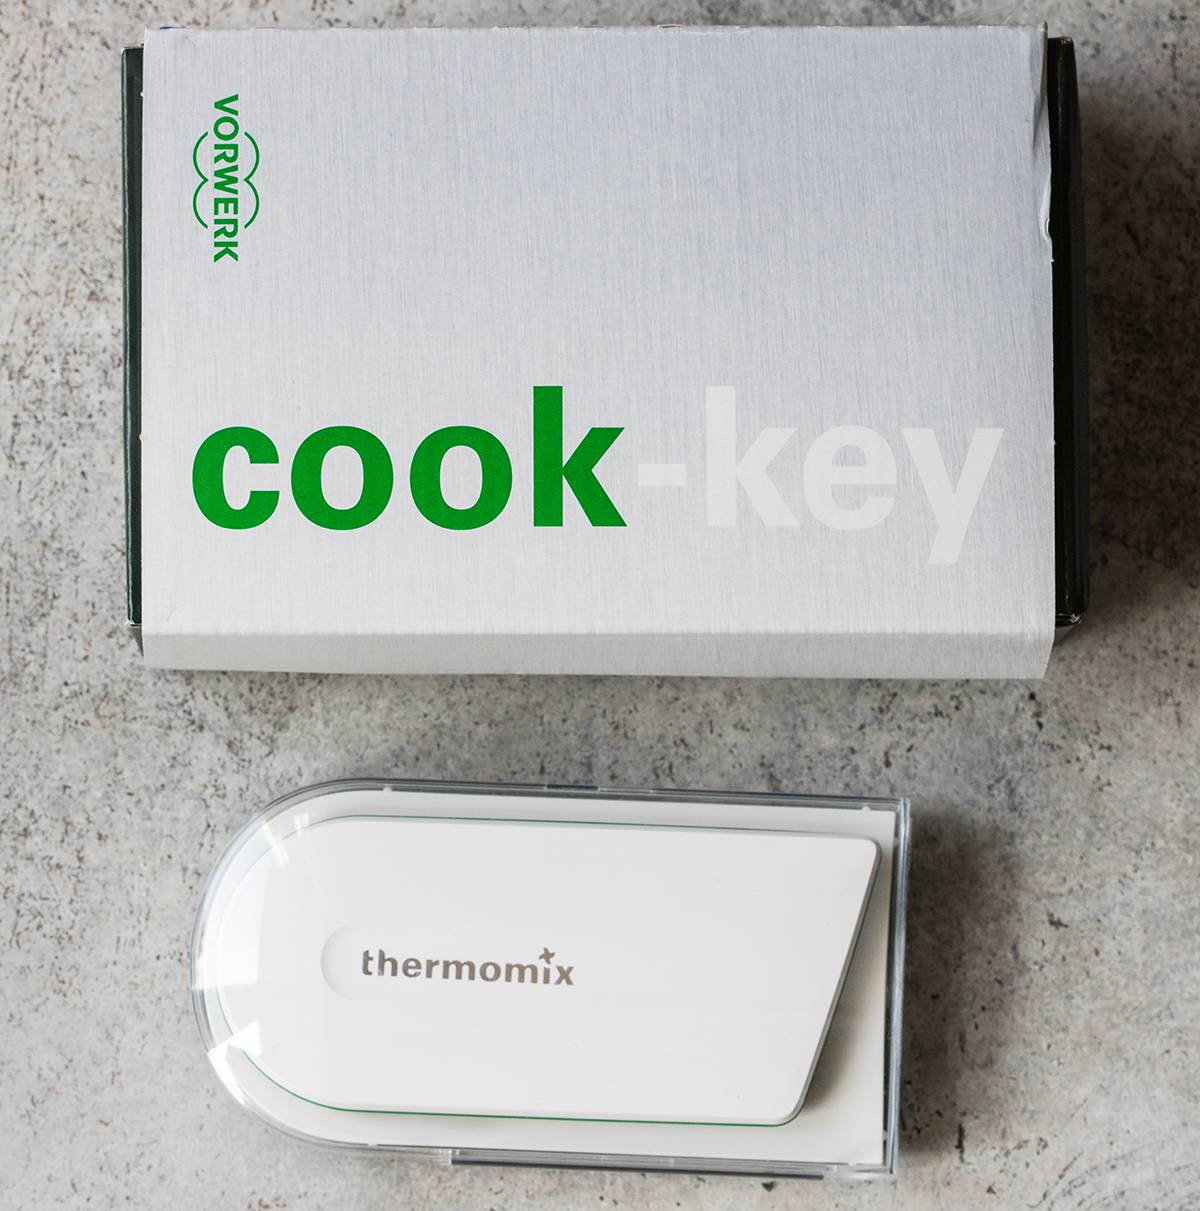 Der Cook-Key